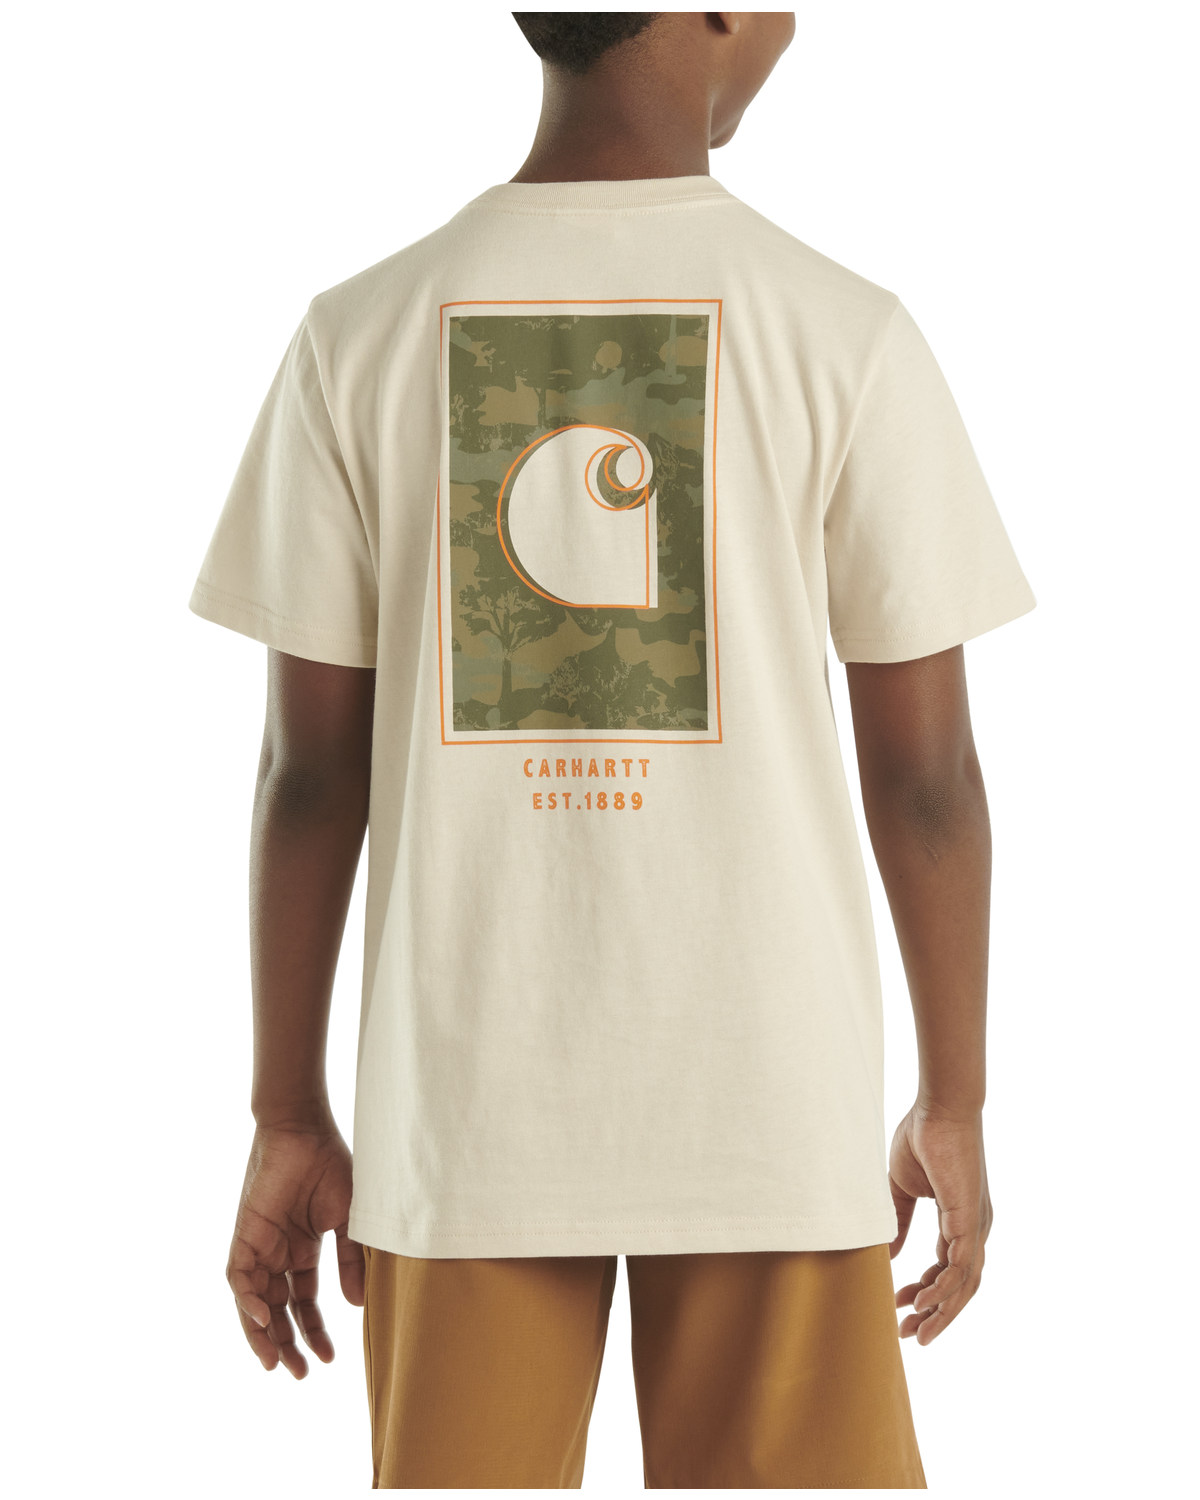 Carhartt Boys' Camo Logo Short Sleeve Graphic T-Shirt